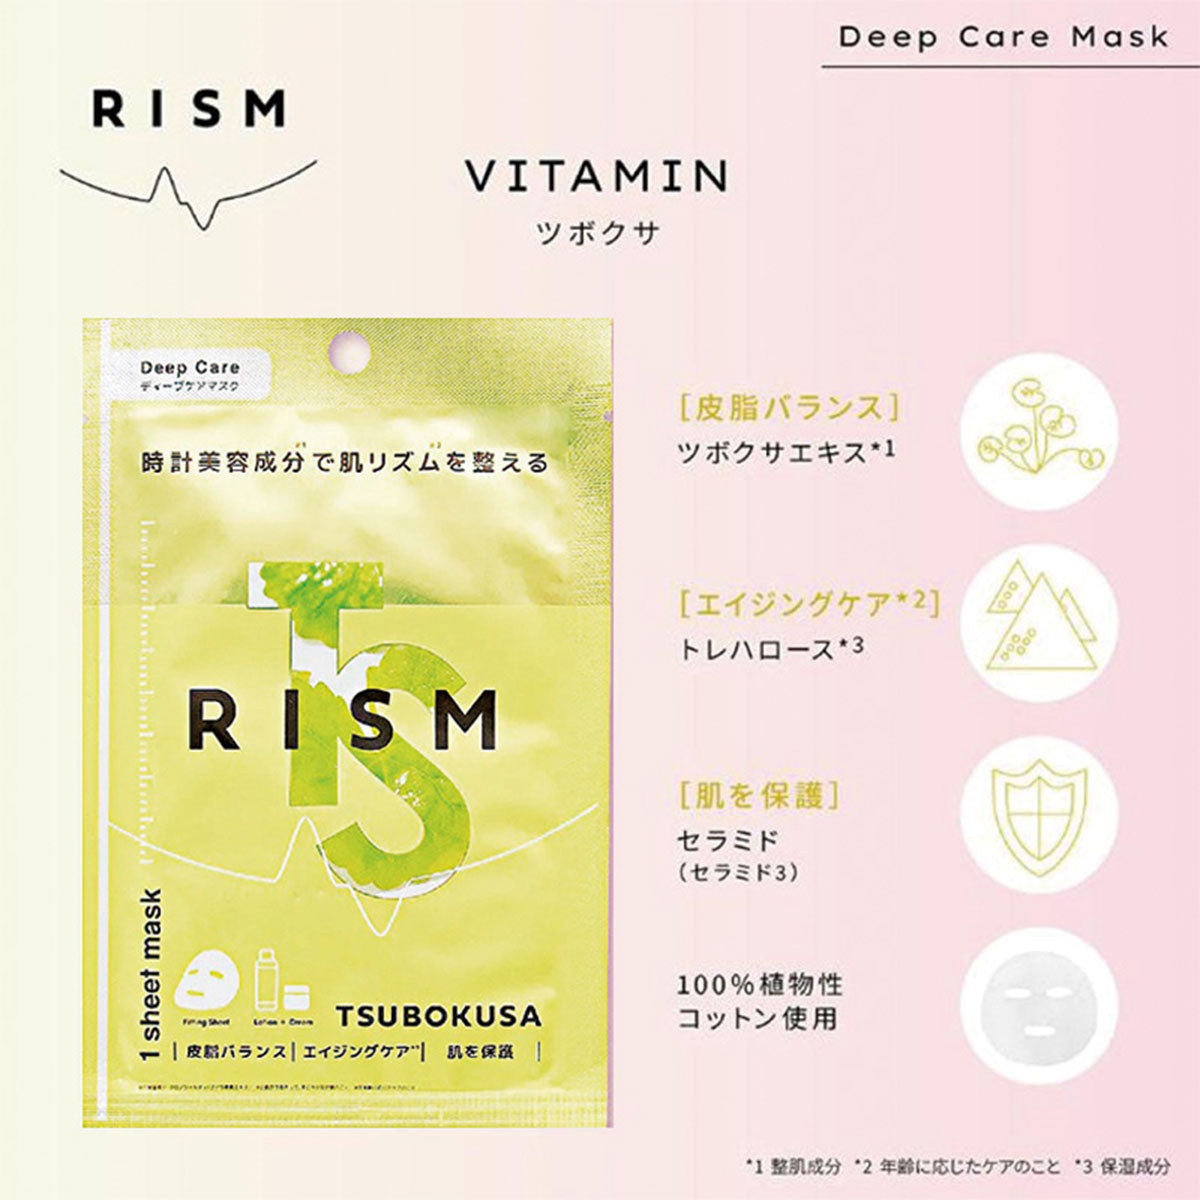 Deep Care Mask Centella Asiatica-Tsubokusa #Sebum Care 1 Sheet